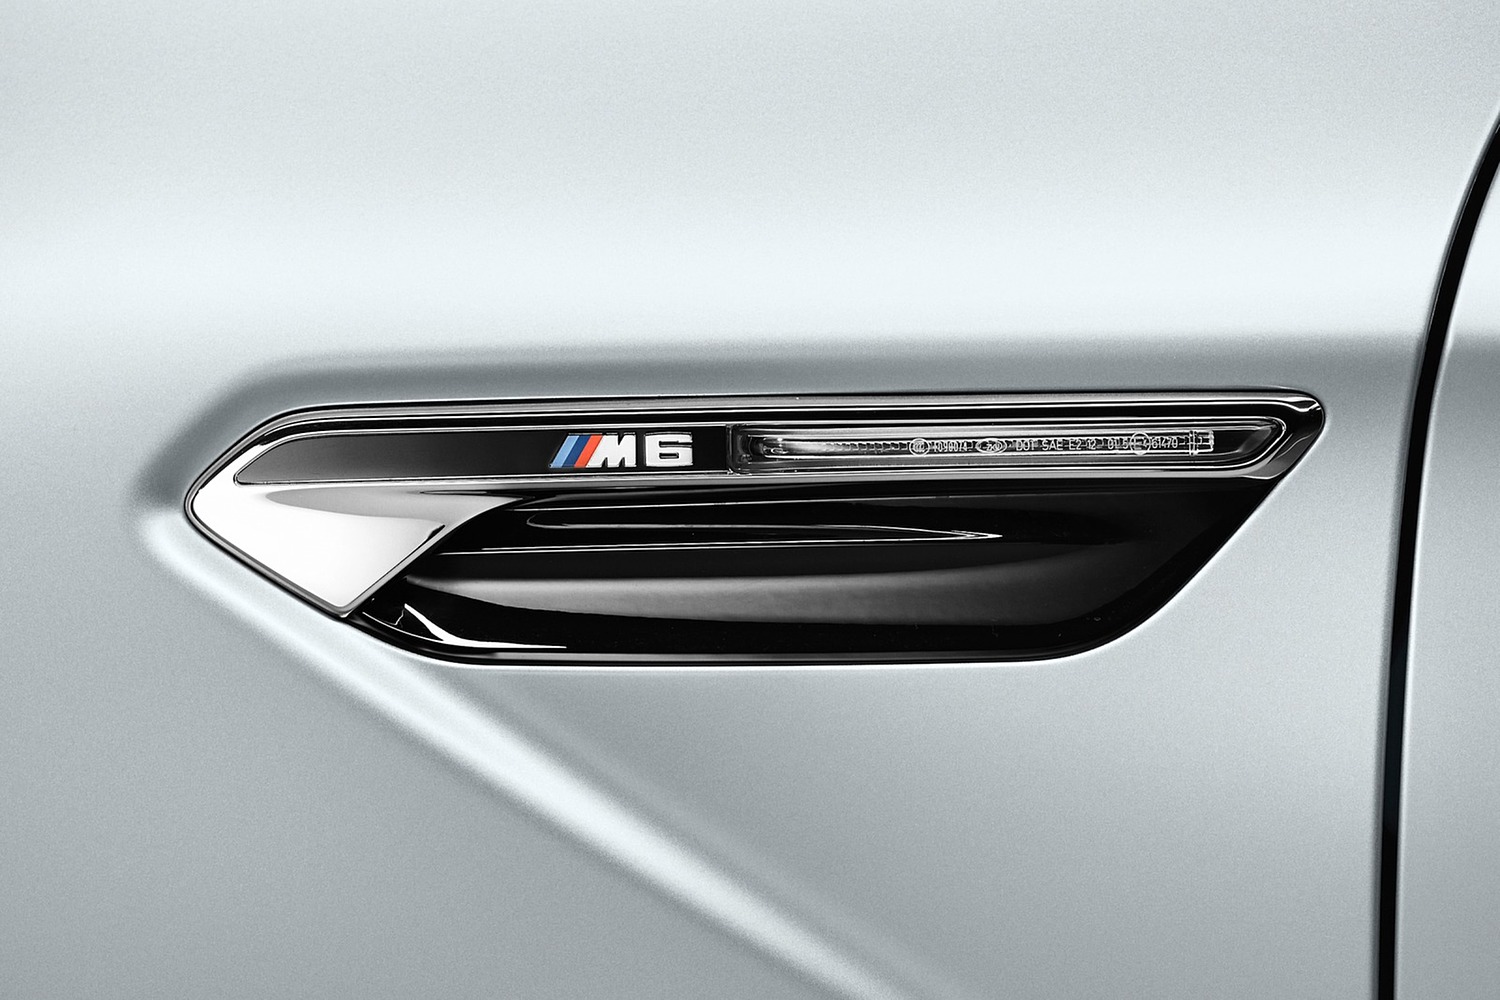 BMW M6 Gran Coupe Sedan Exterior Detail (2017 model year shown)